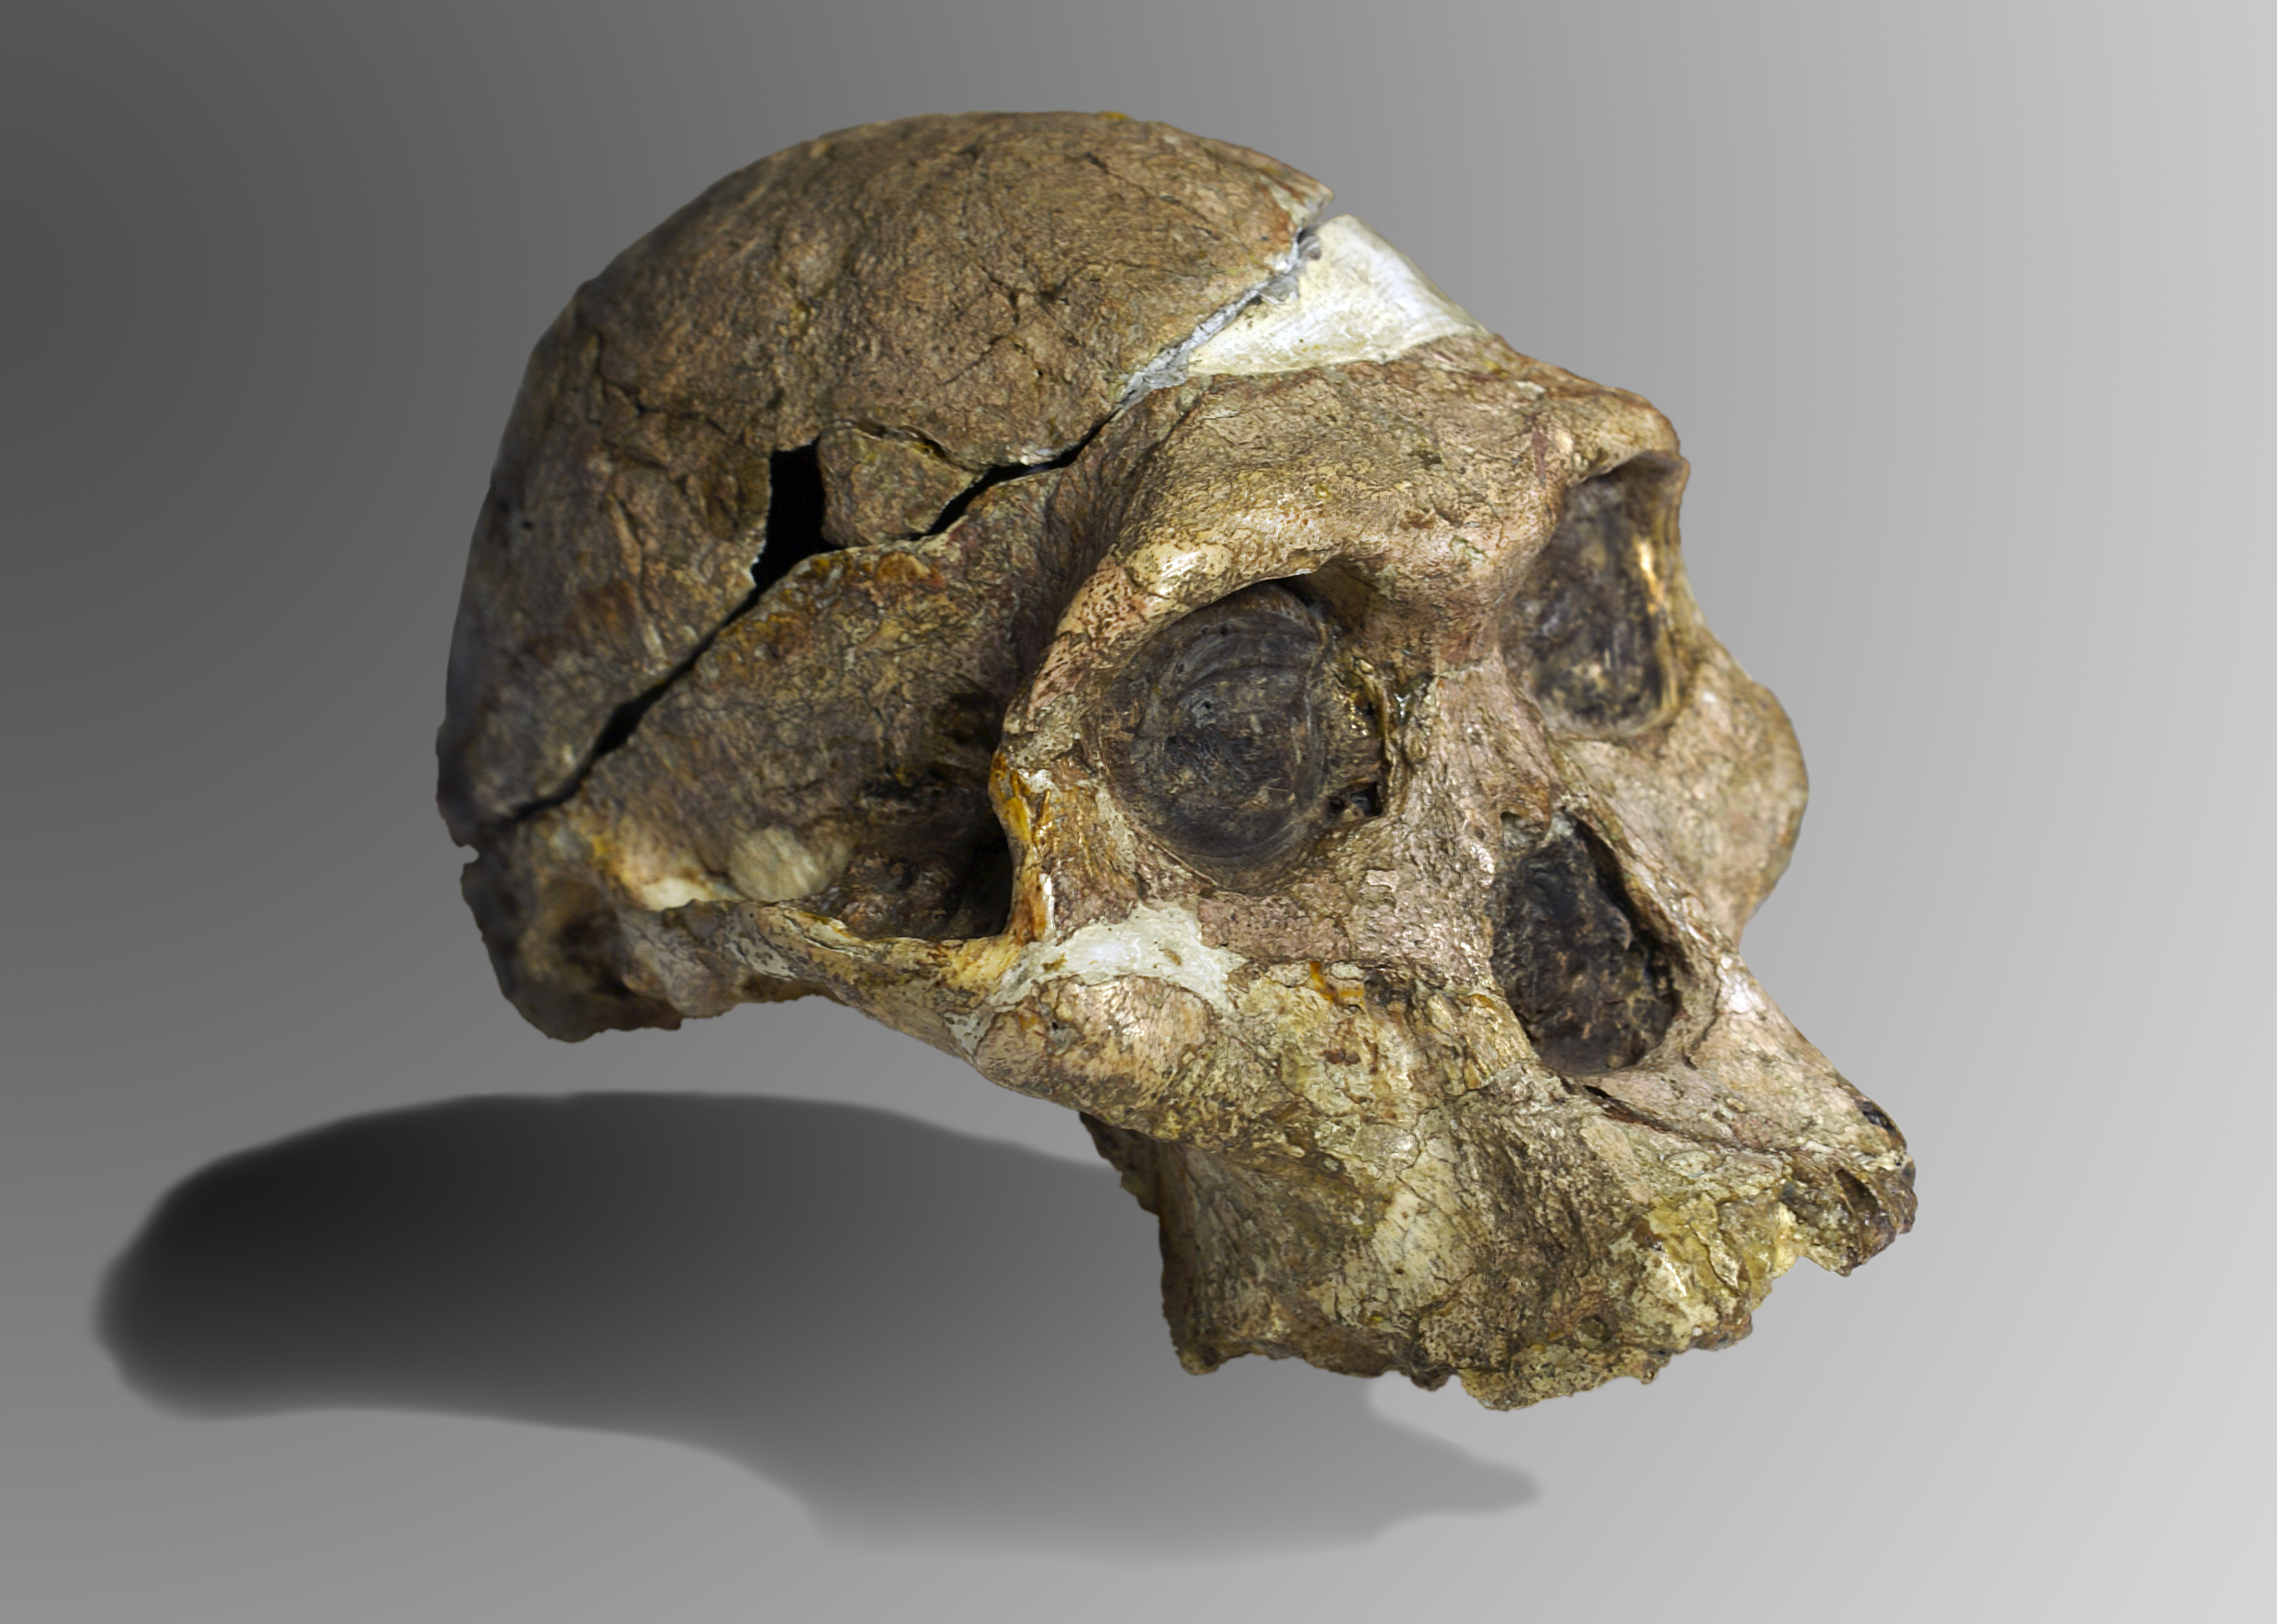 Human evolution: autralopithecus